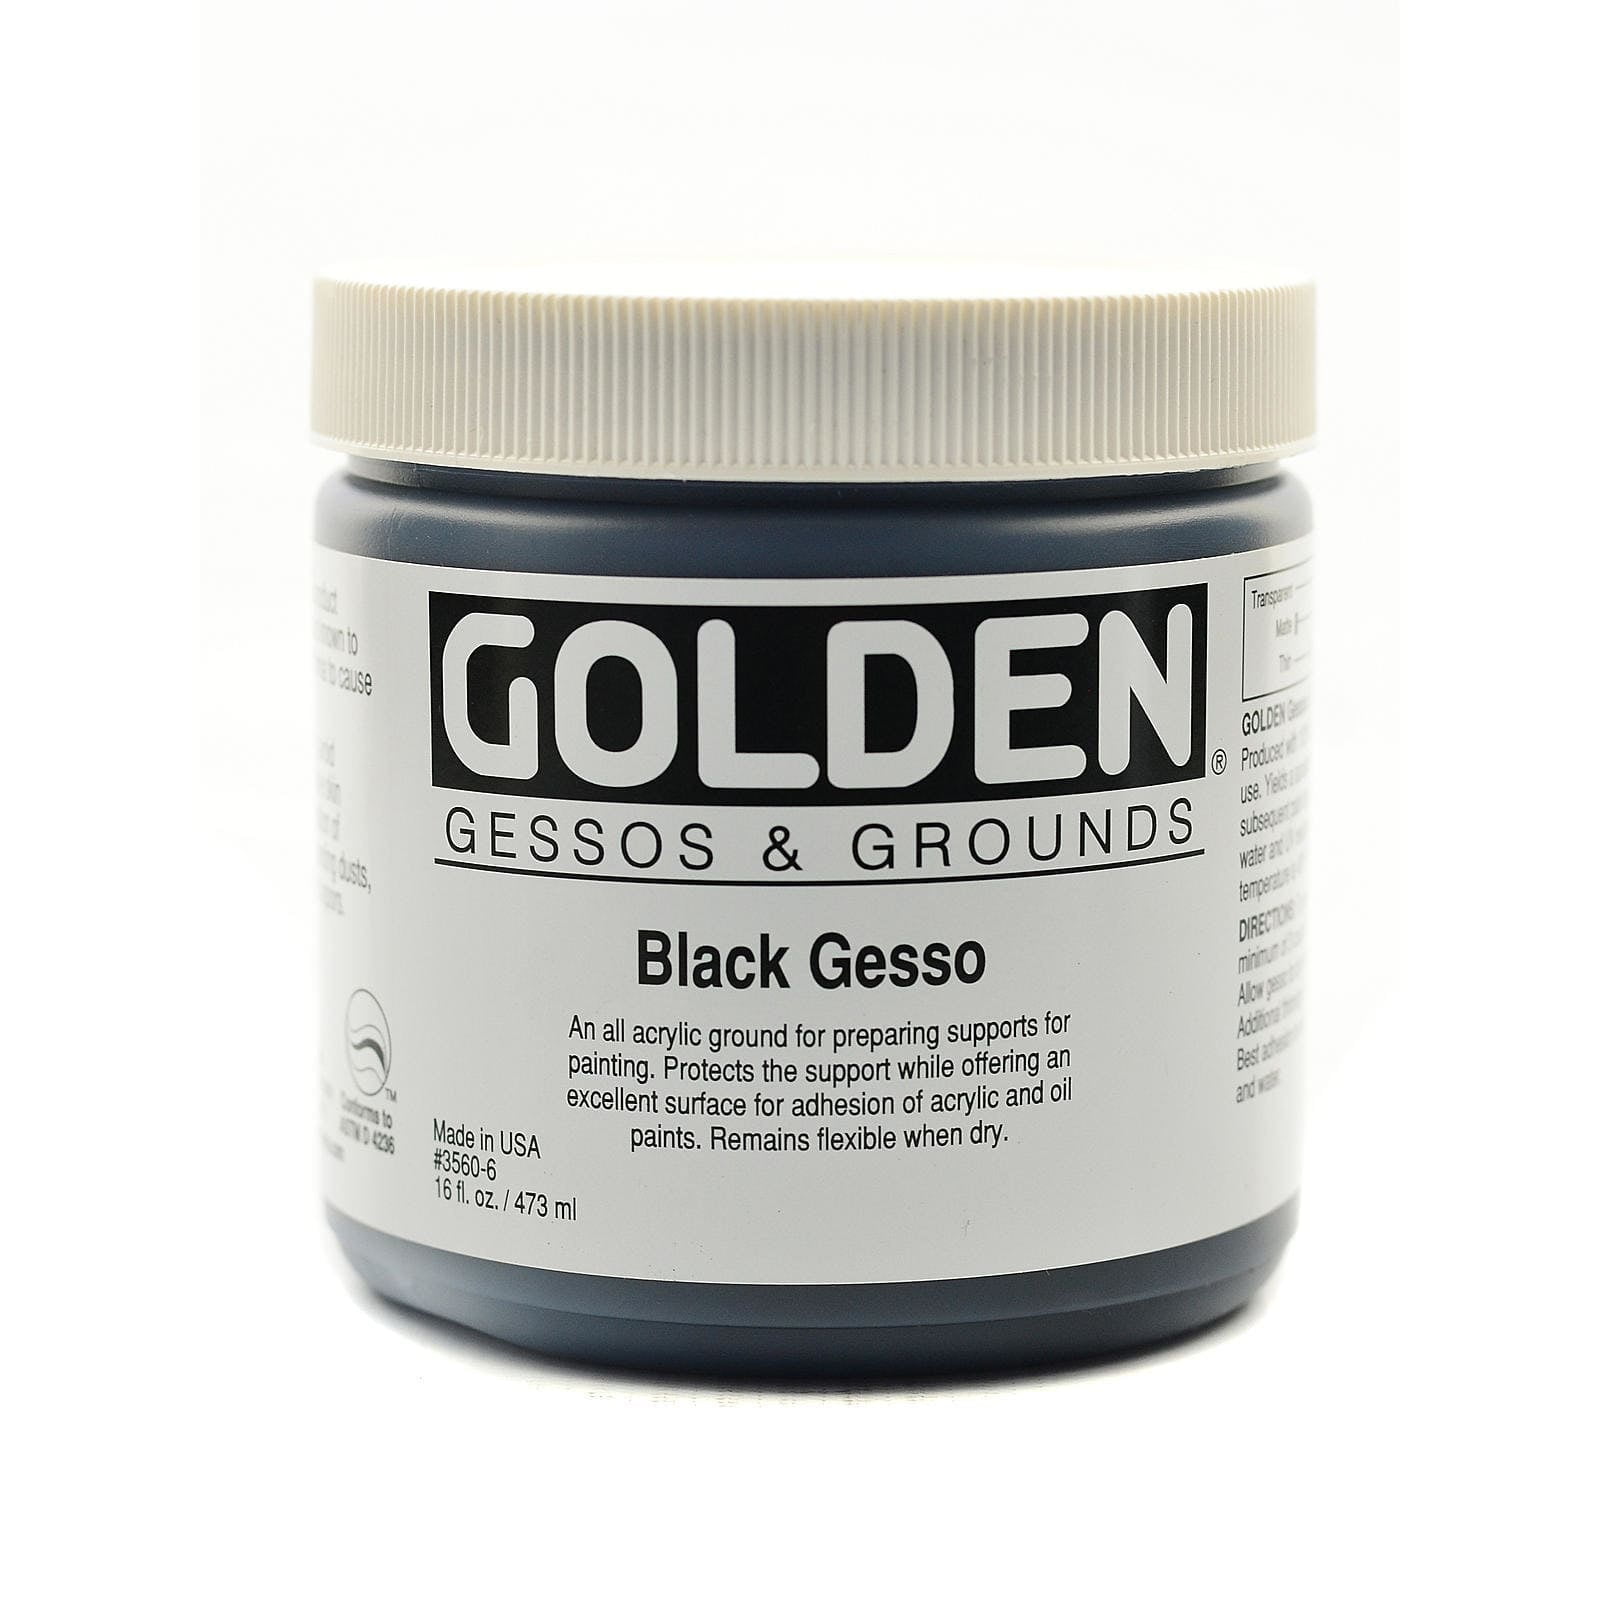 GOLDEN BLACK GESSO 32oz